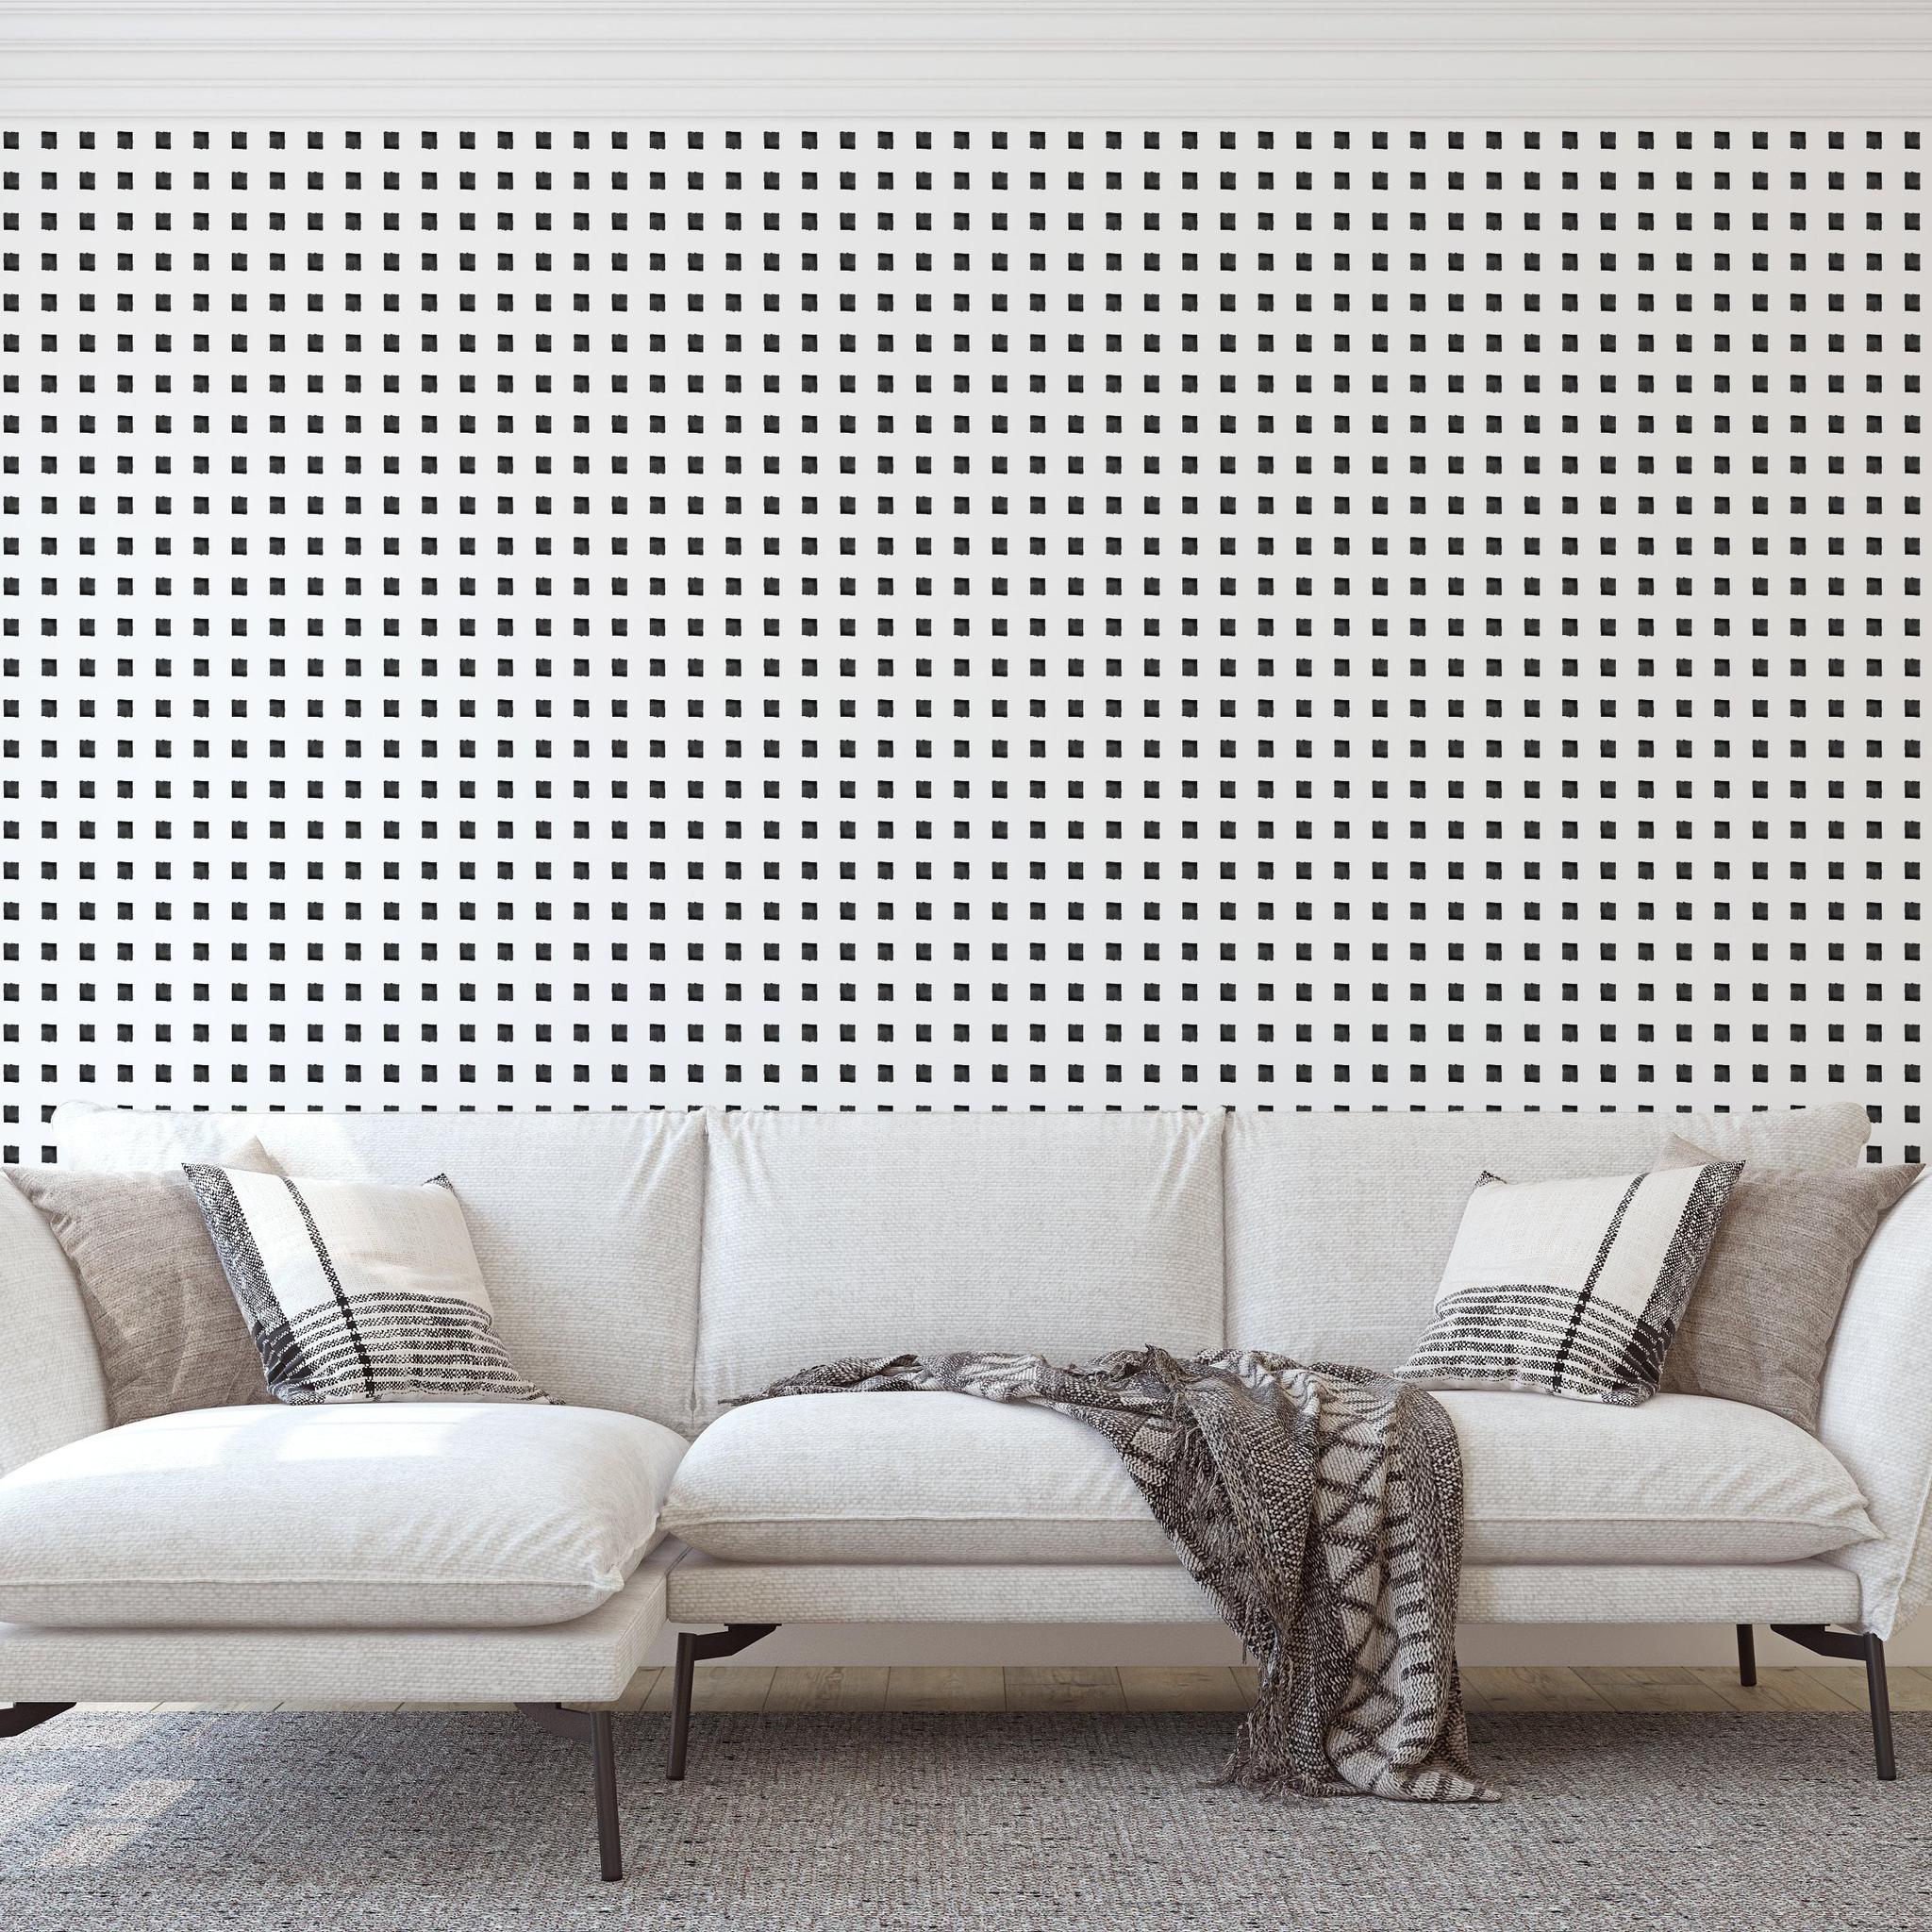 Modern living room featuring The Tara Wallpaper by Wall Blush, showcasing elegant black and white patterns.
